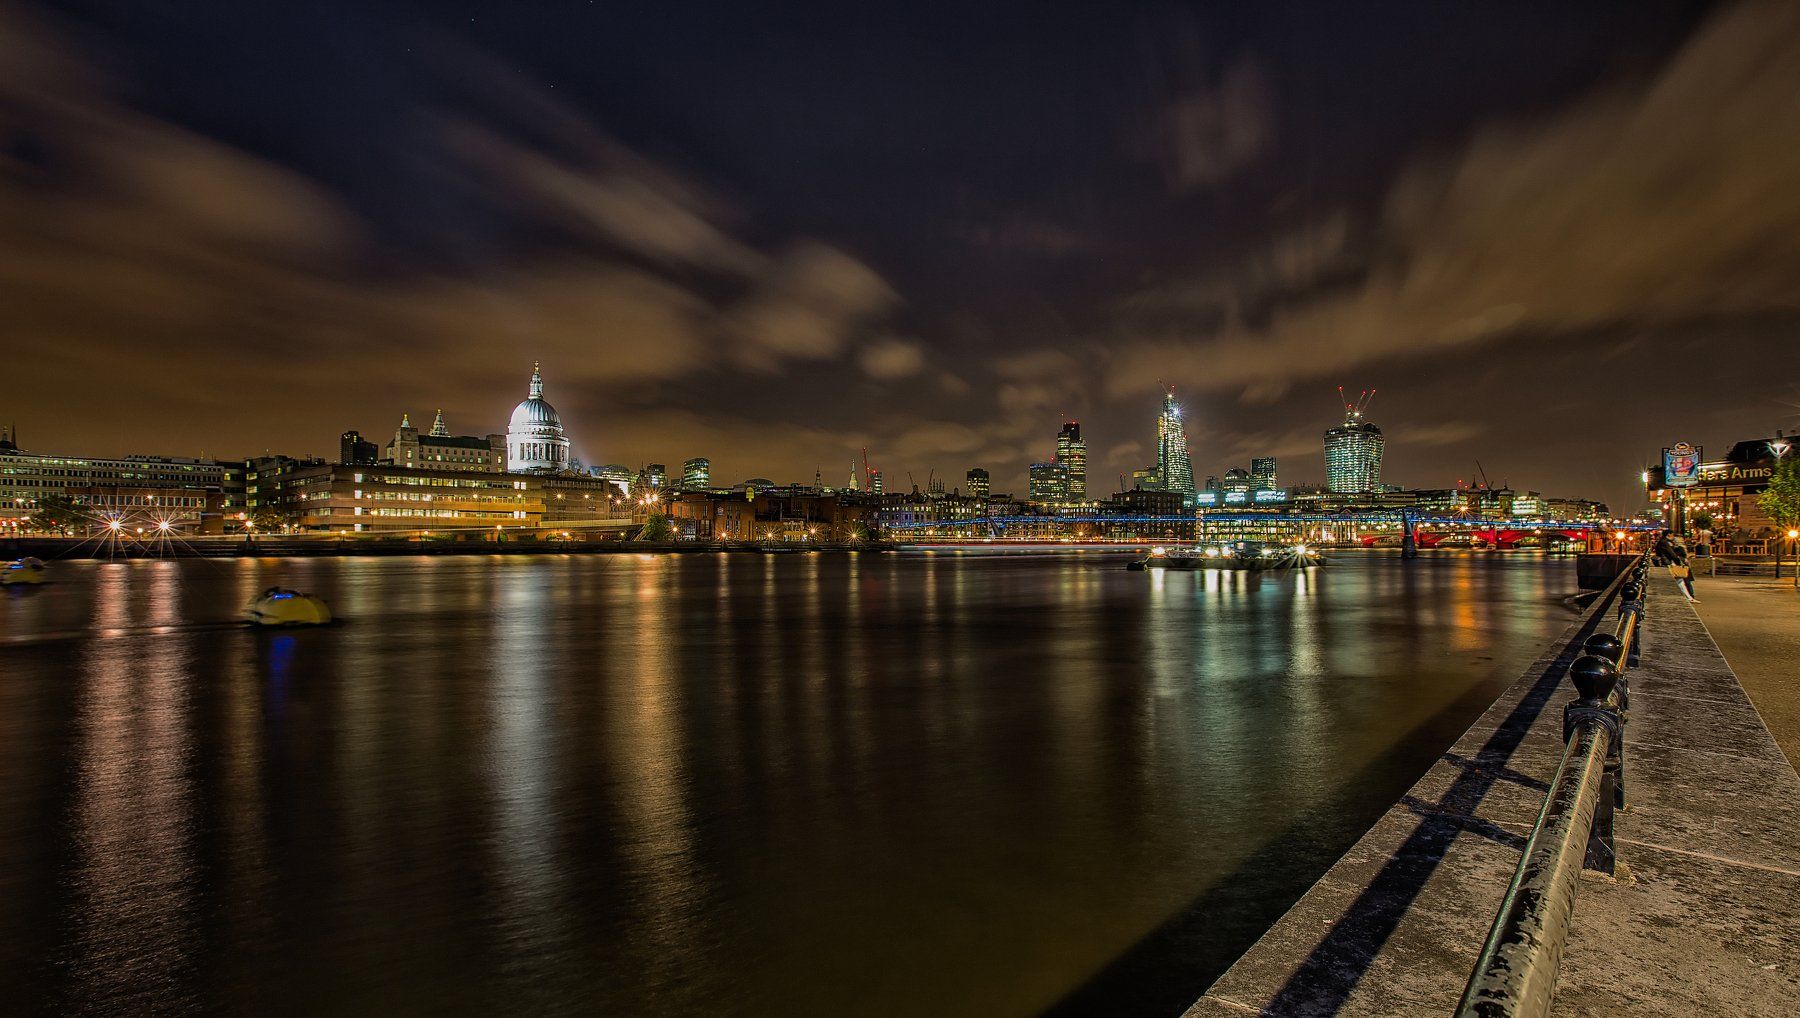 london by night, lonx exposure, canon, Ivan Lambrev